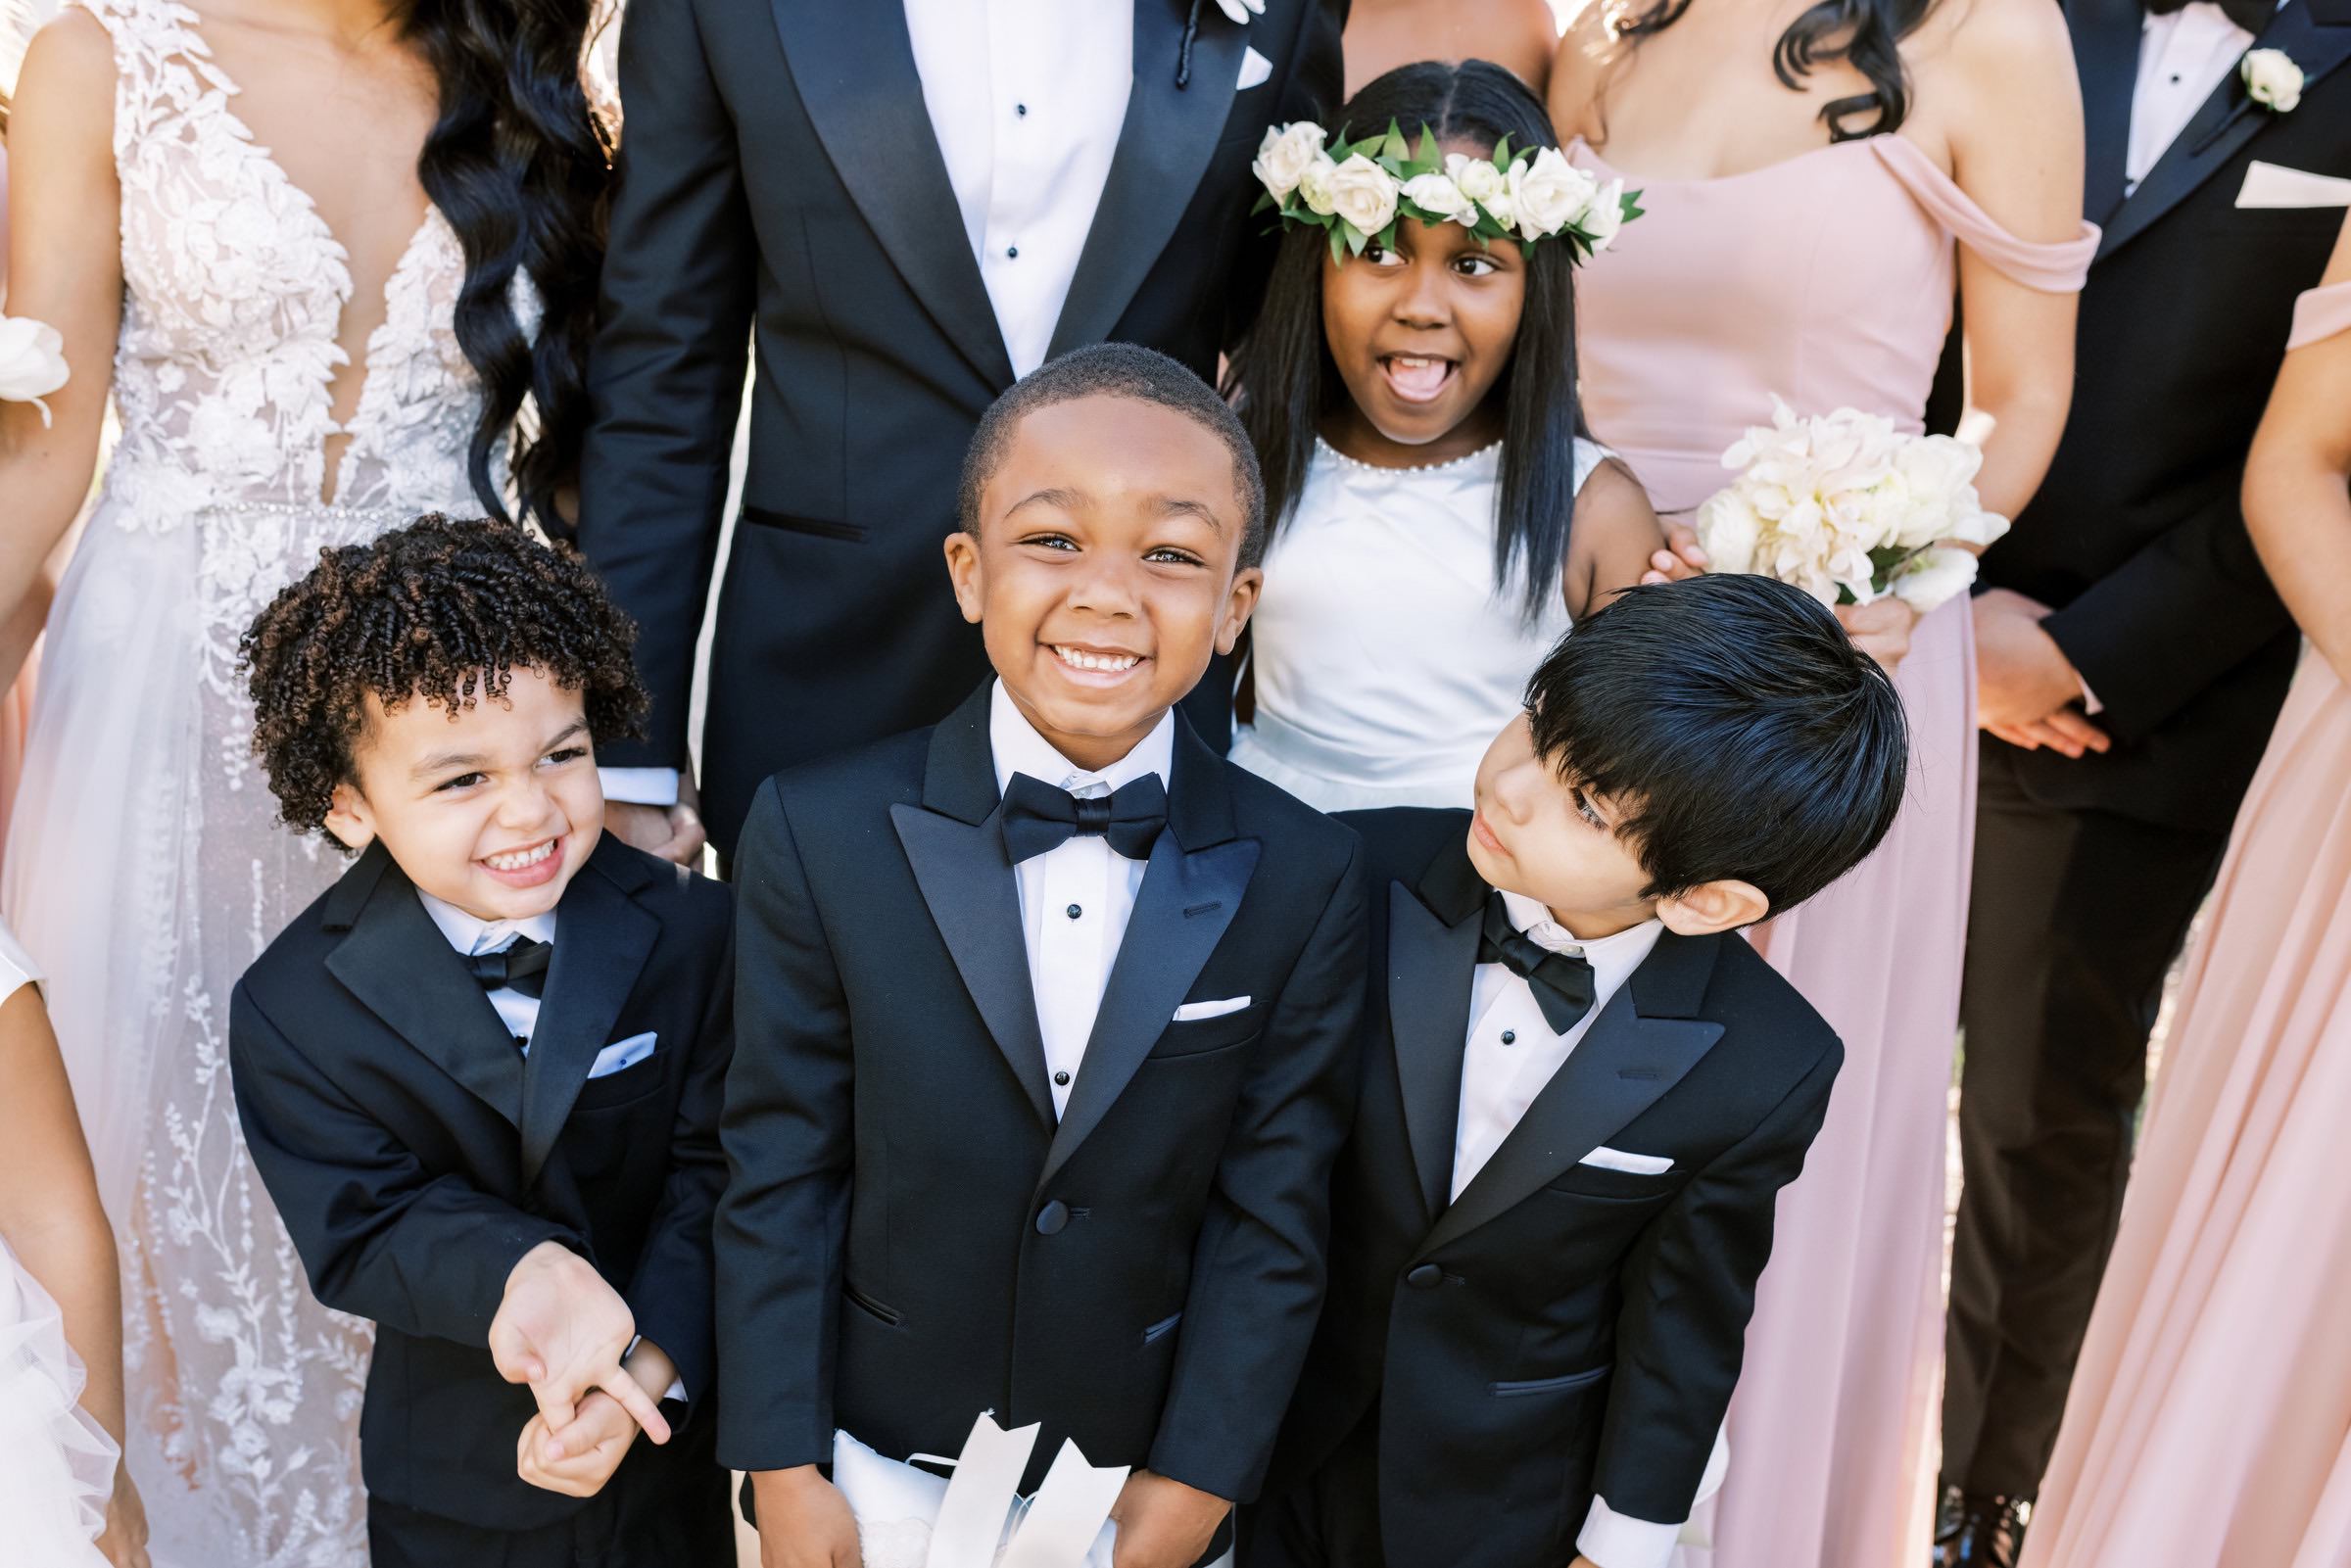 Wedding Children - Photography: Brooke Images